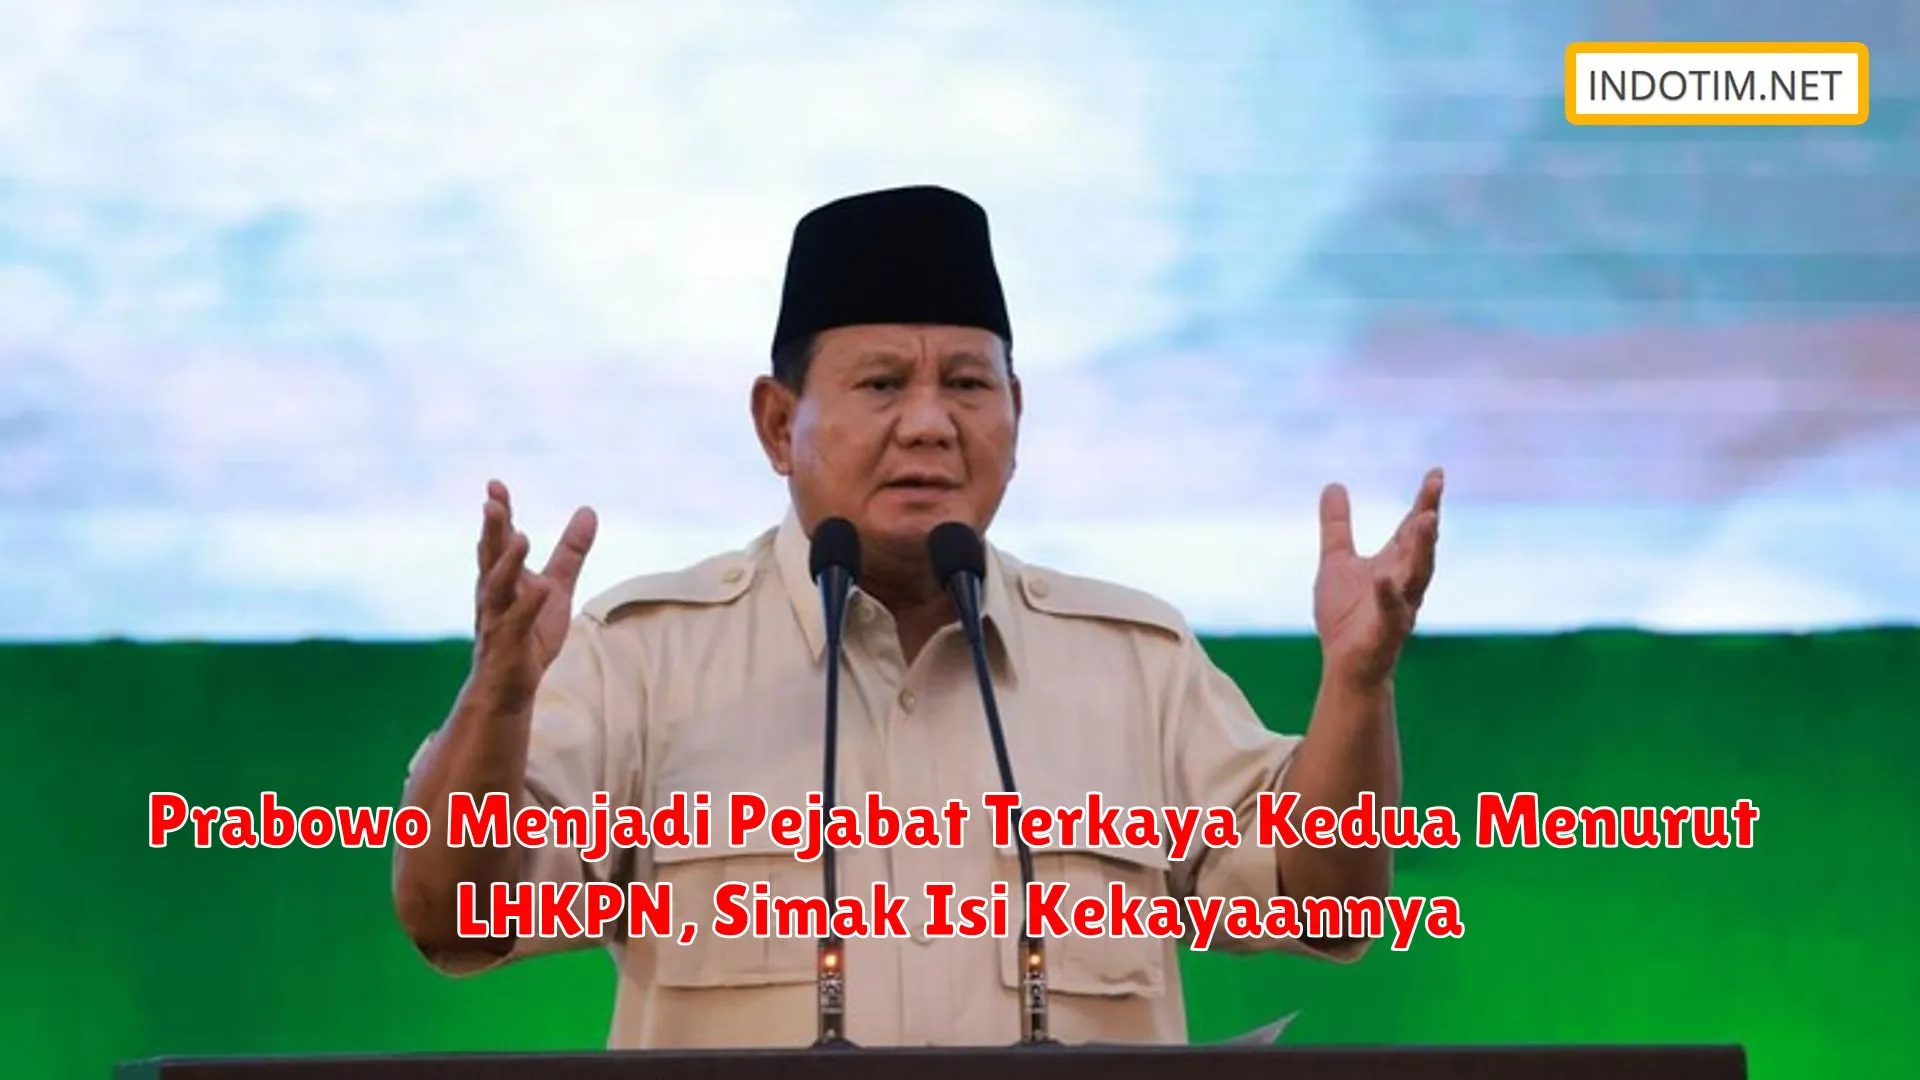 Prabowo Menjadi Pejabat Terkaya Kedua Menurut LHKPN, Simak Isi Kekayaannya